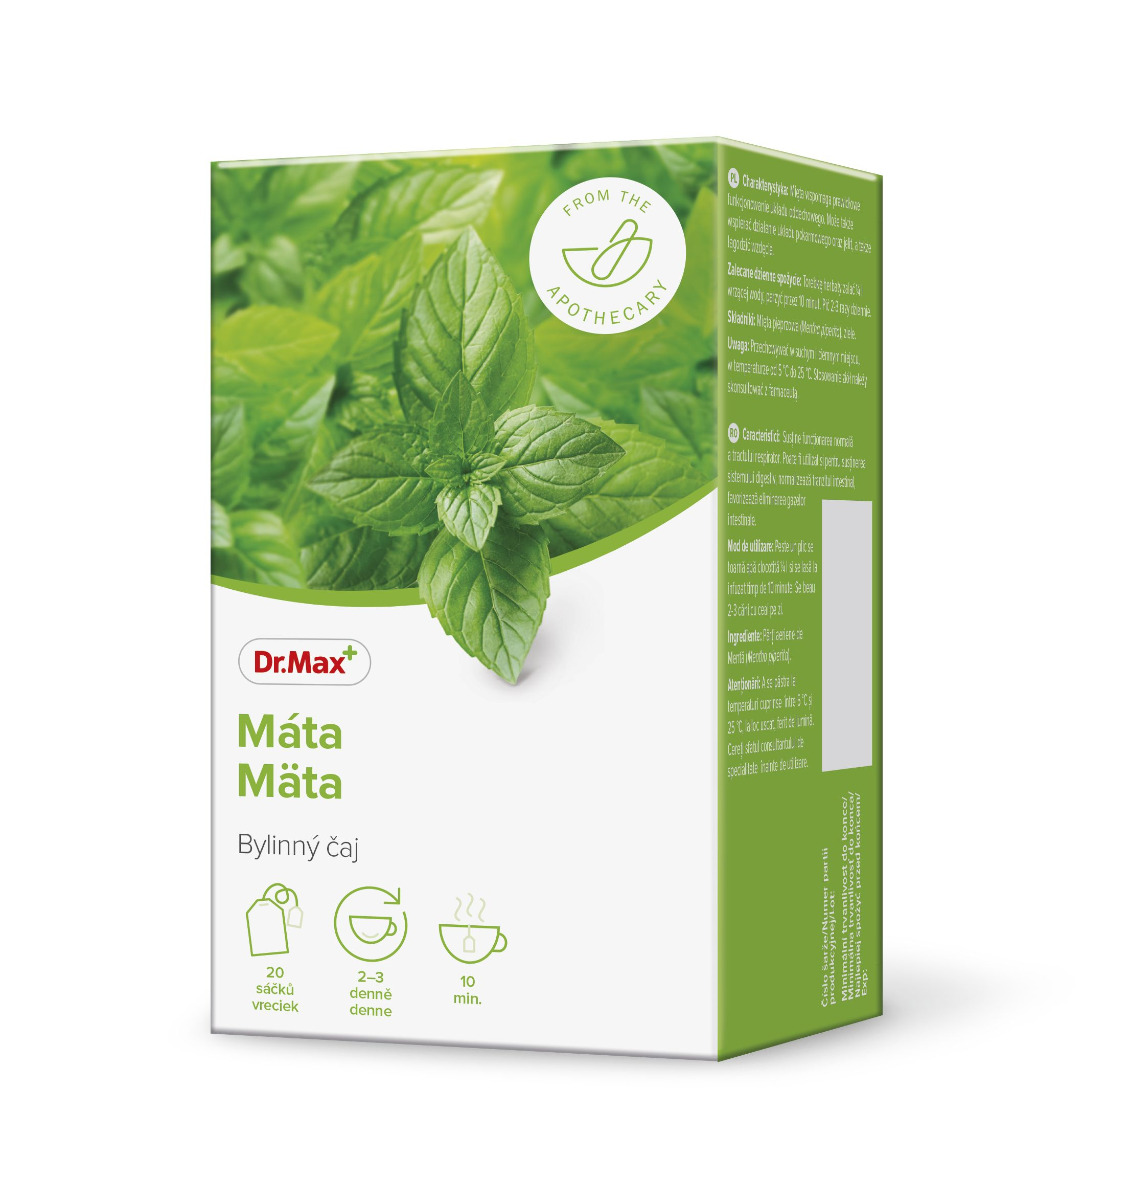 Dr.Max Máta bylinný čaj 20x1